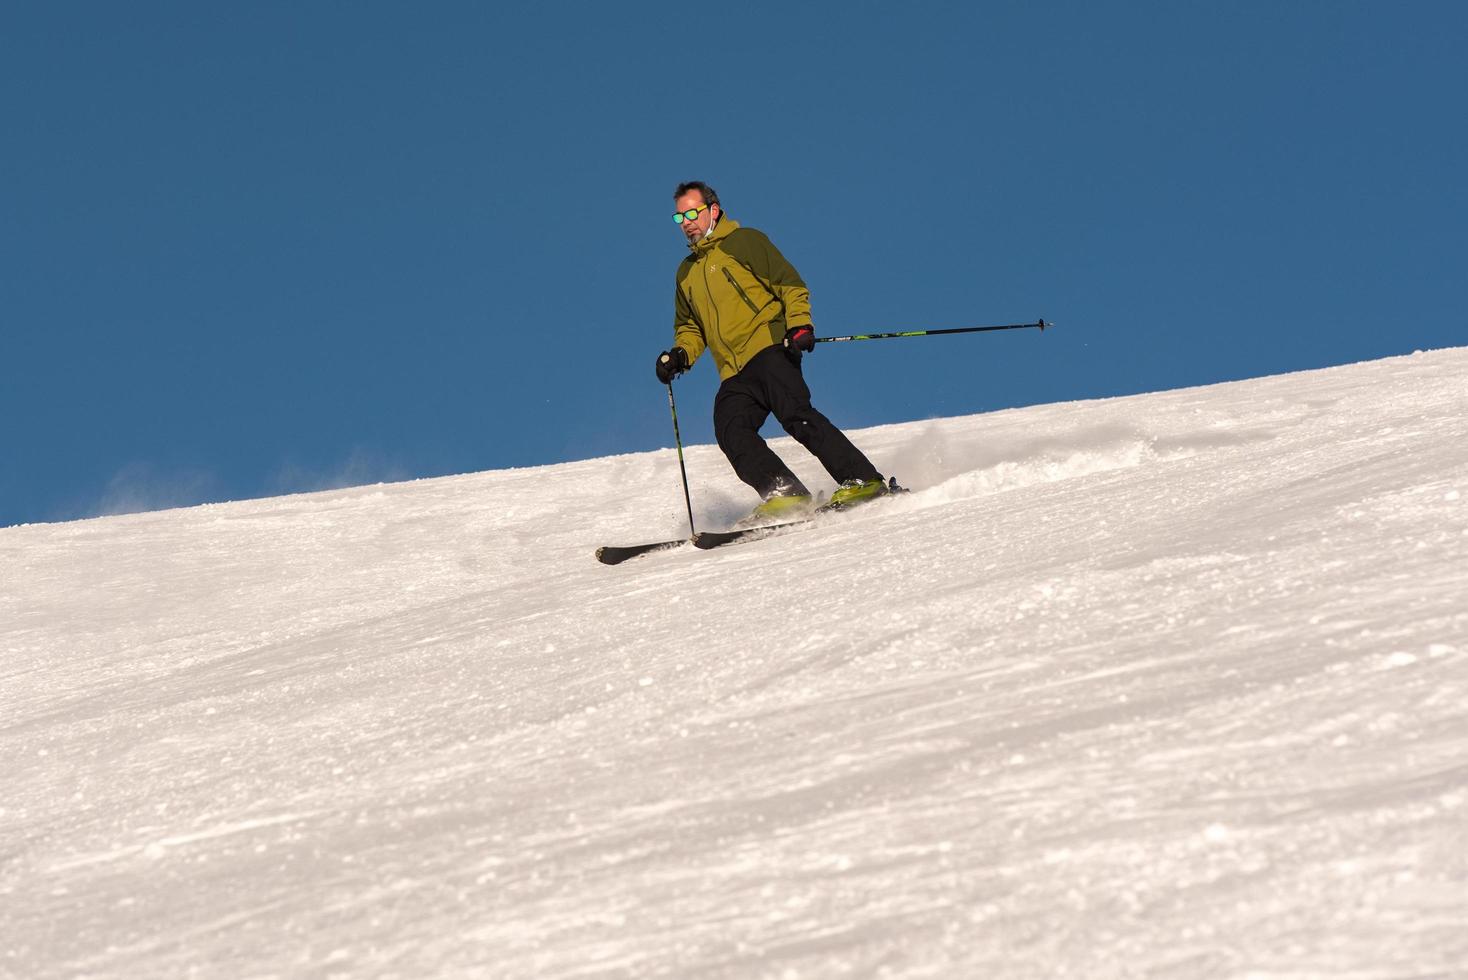 grandvalira, andorra, 03 januari 2021 - jonge man skiën in de pyreneeën in het skigebied grandvalira foto